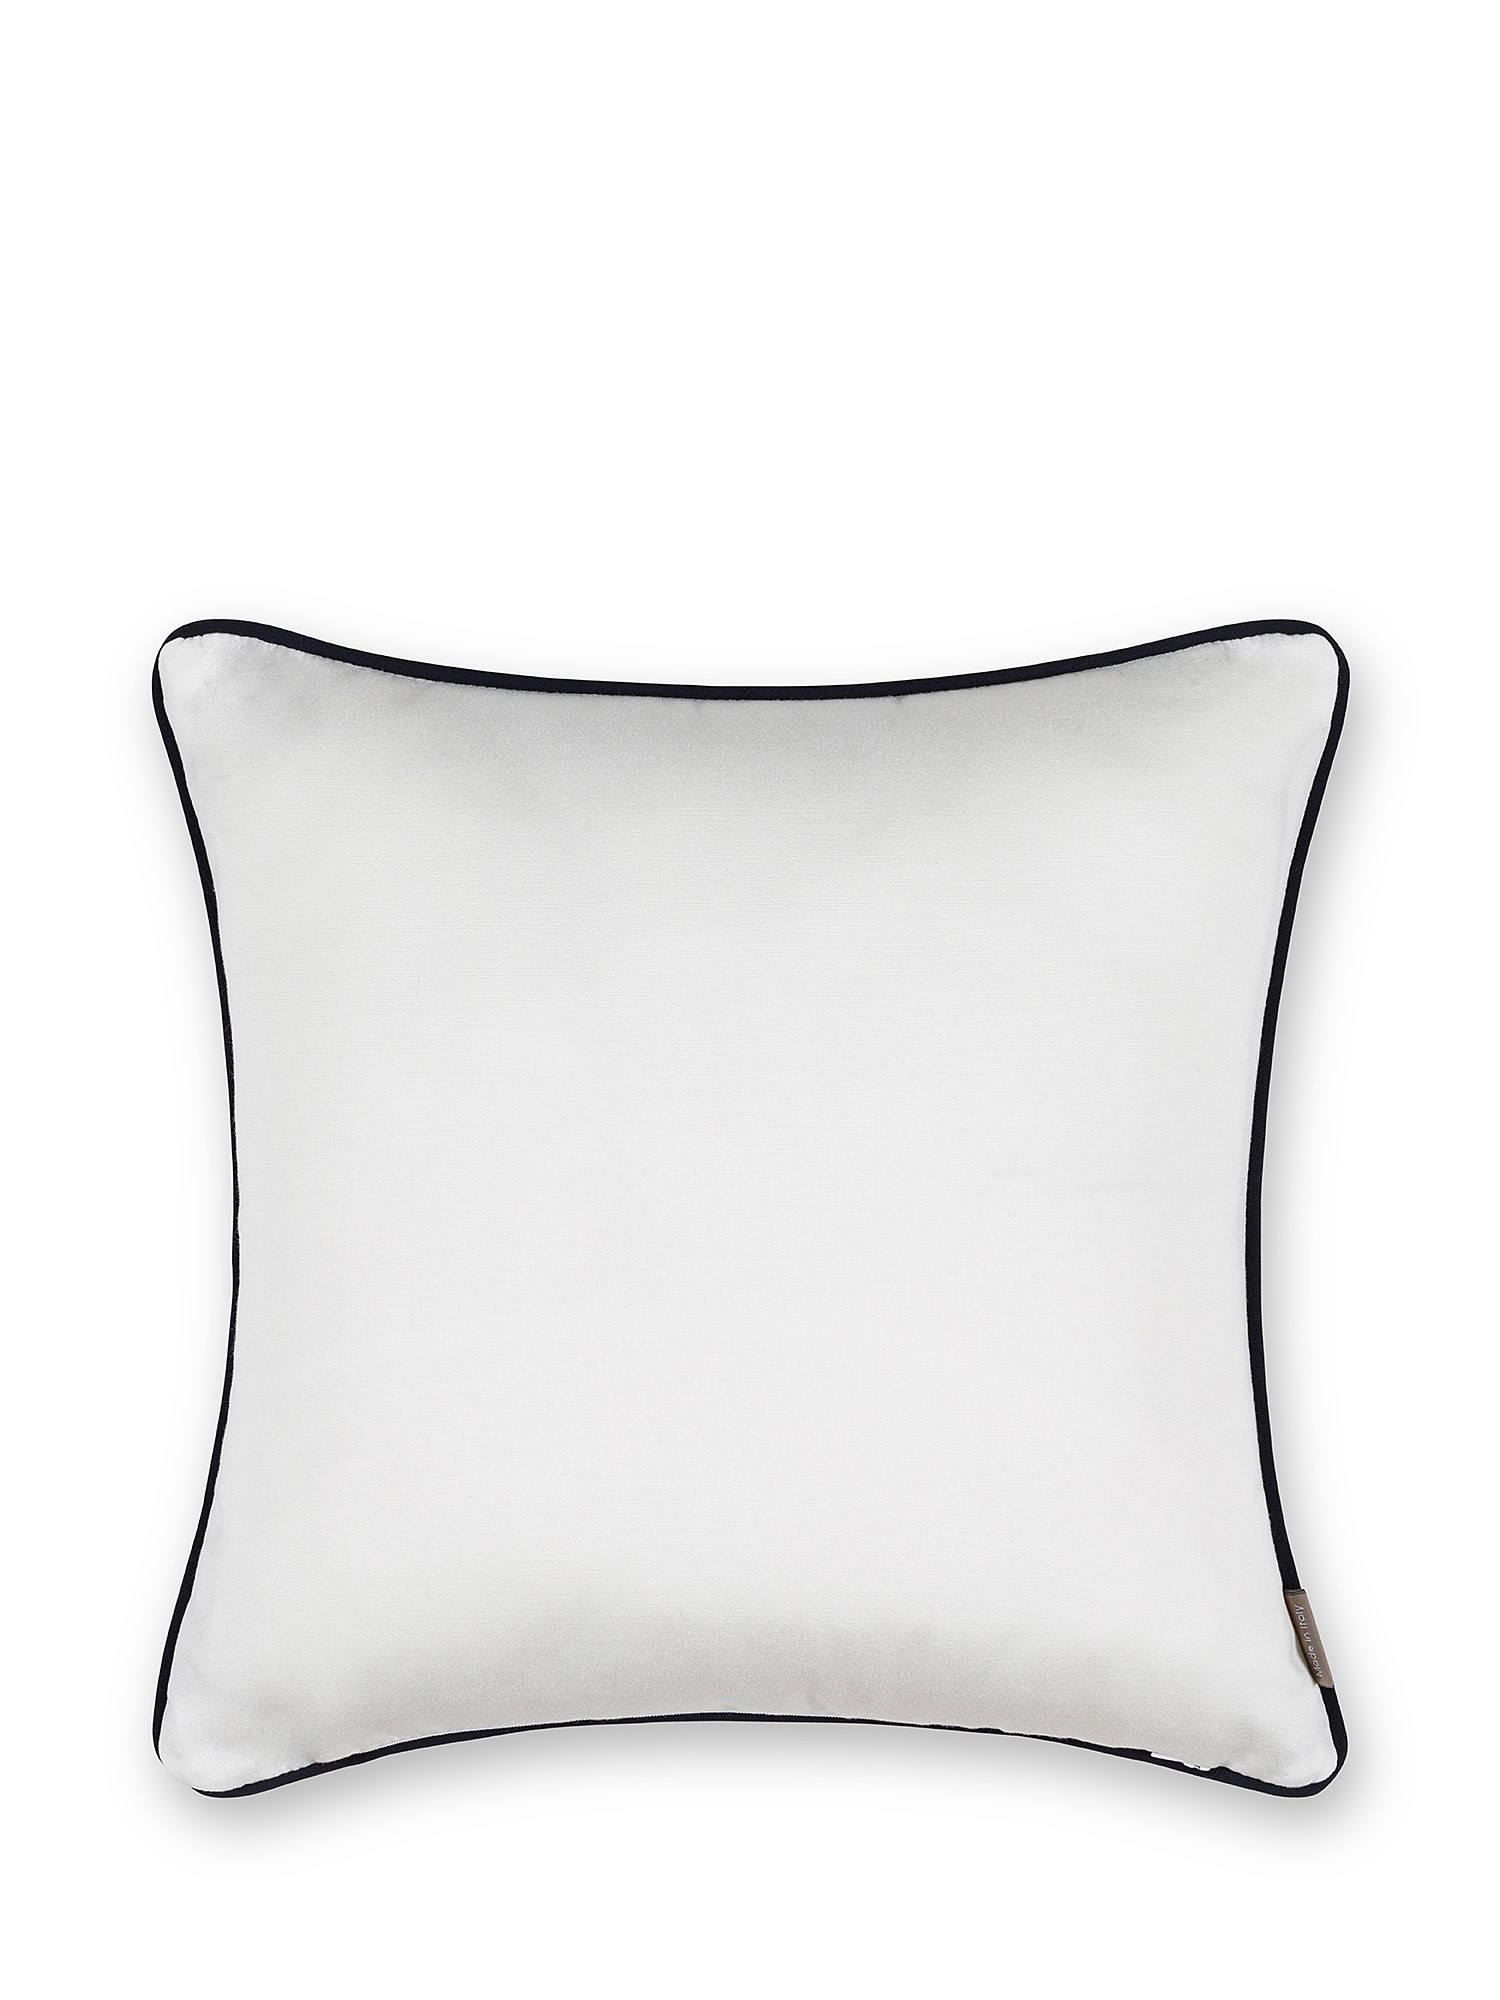 Cuscino da esterno in teflon 45x45cm, Bianco, large image number 1